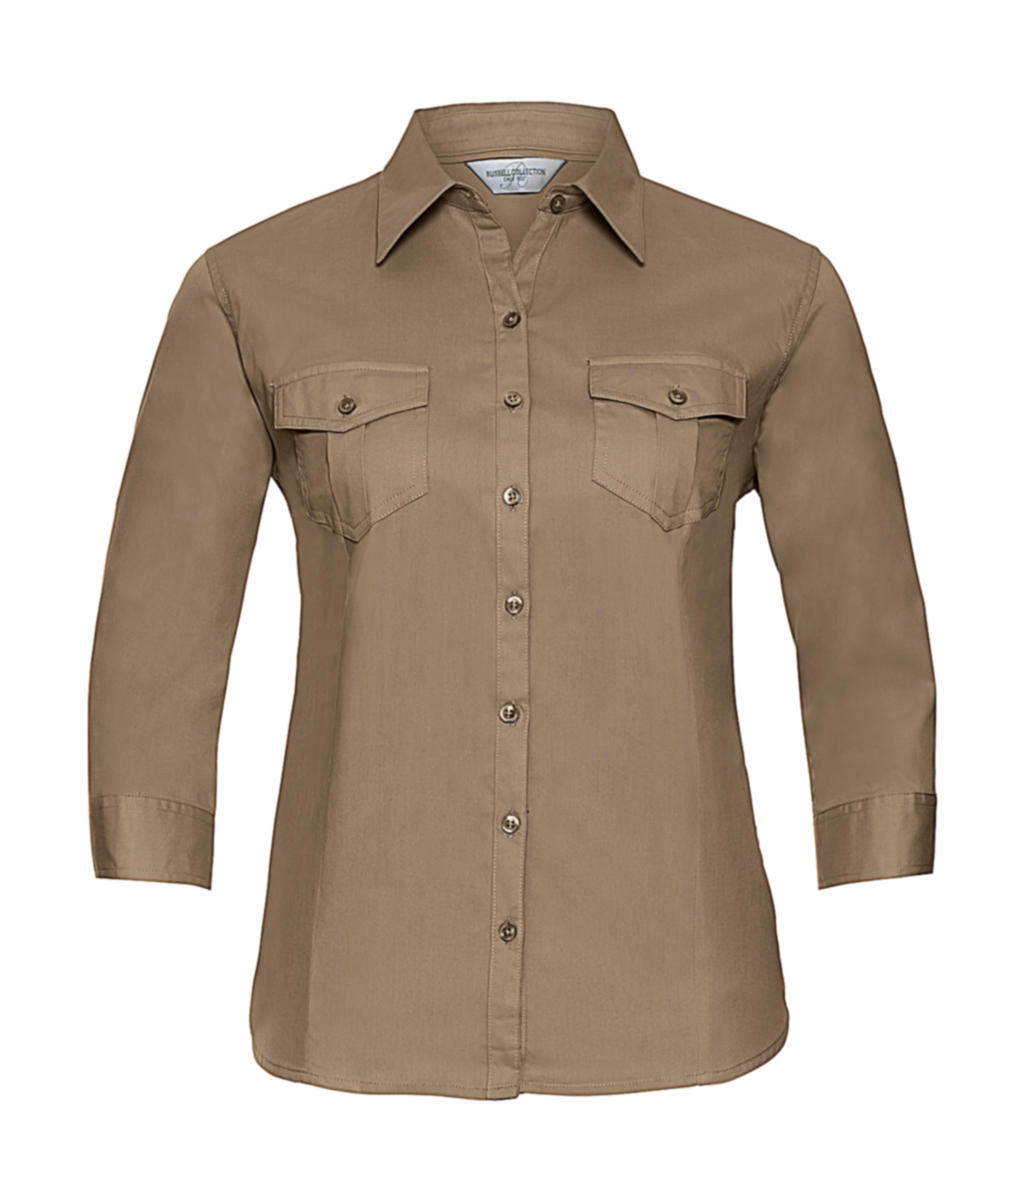  Ladies Roll 3/4 Sleeve Shirt in Farbe Khaki